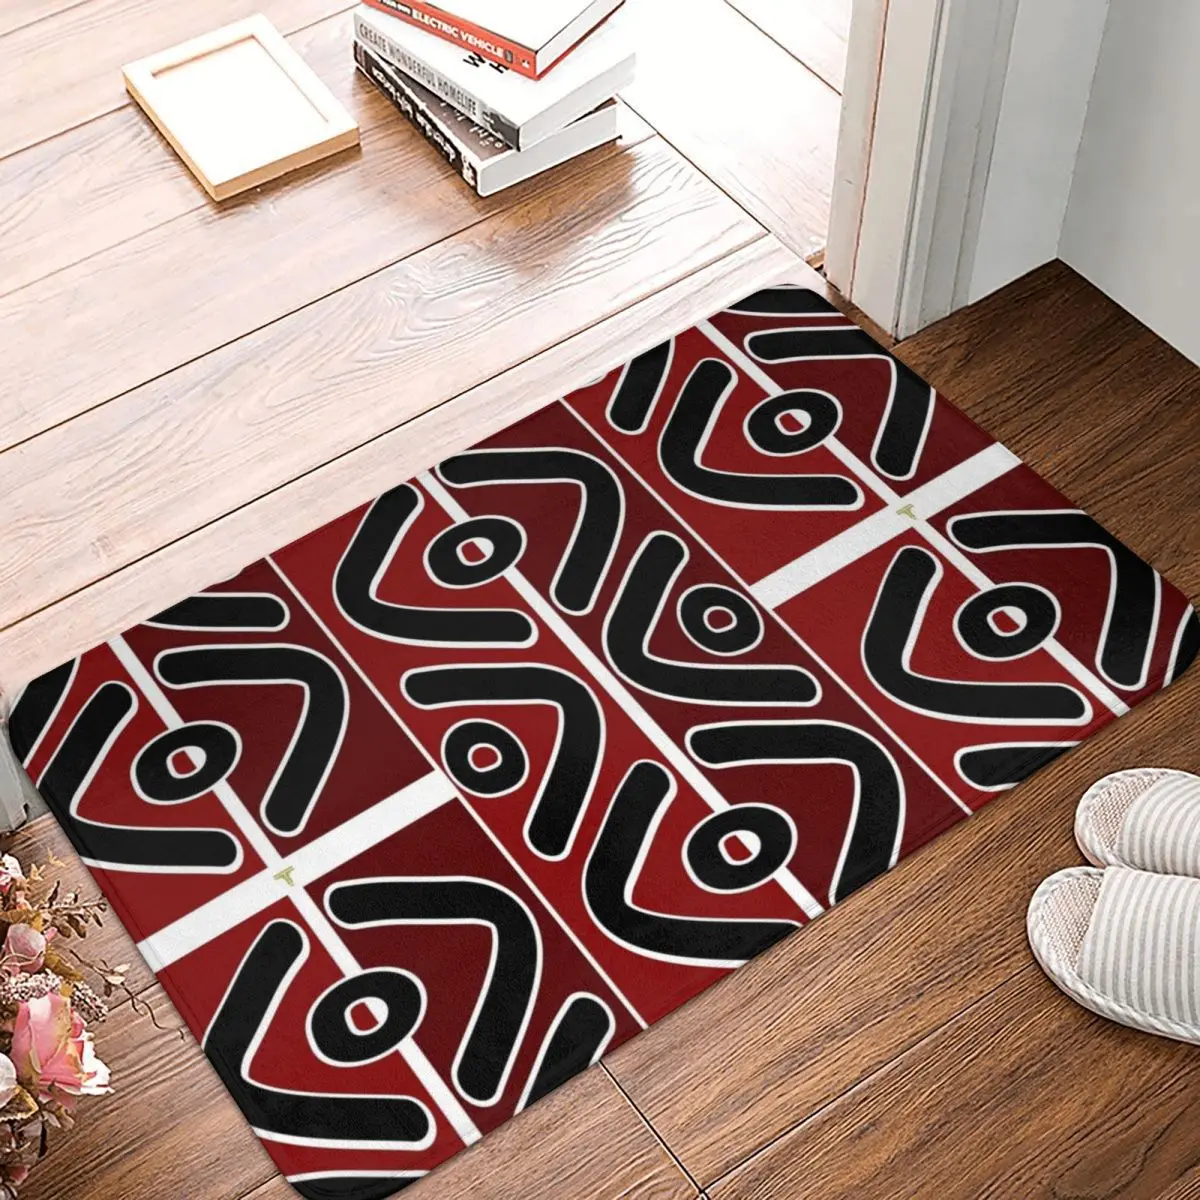 African bogolan mudcloth pattern doormat anti skid super absorbent bath mats home entrance rugs kitchen carpet